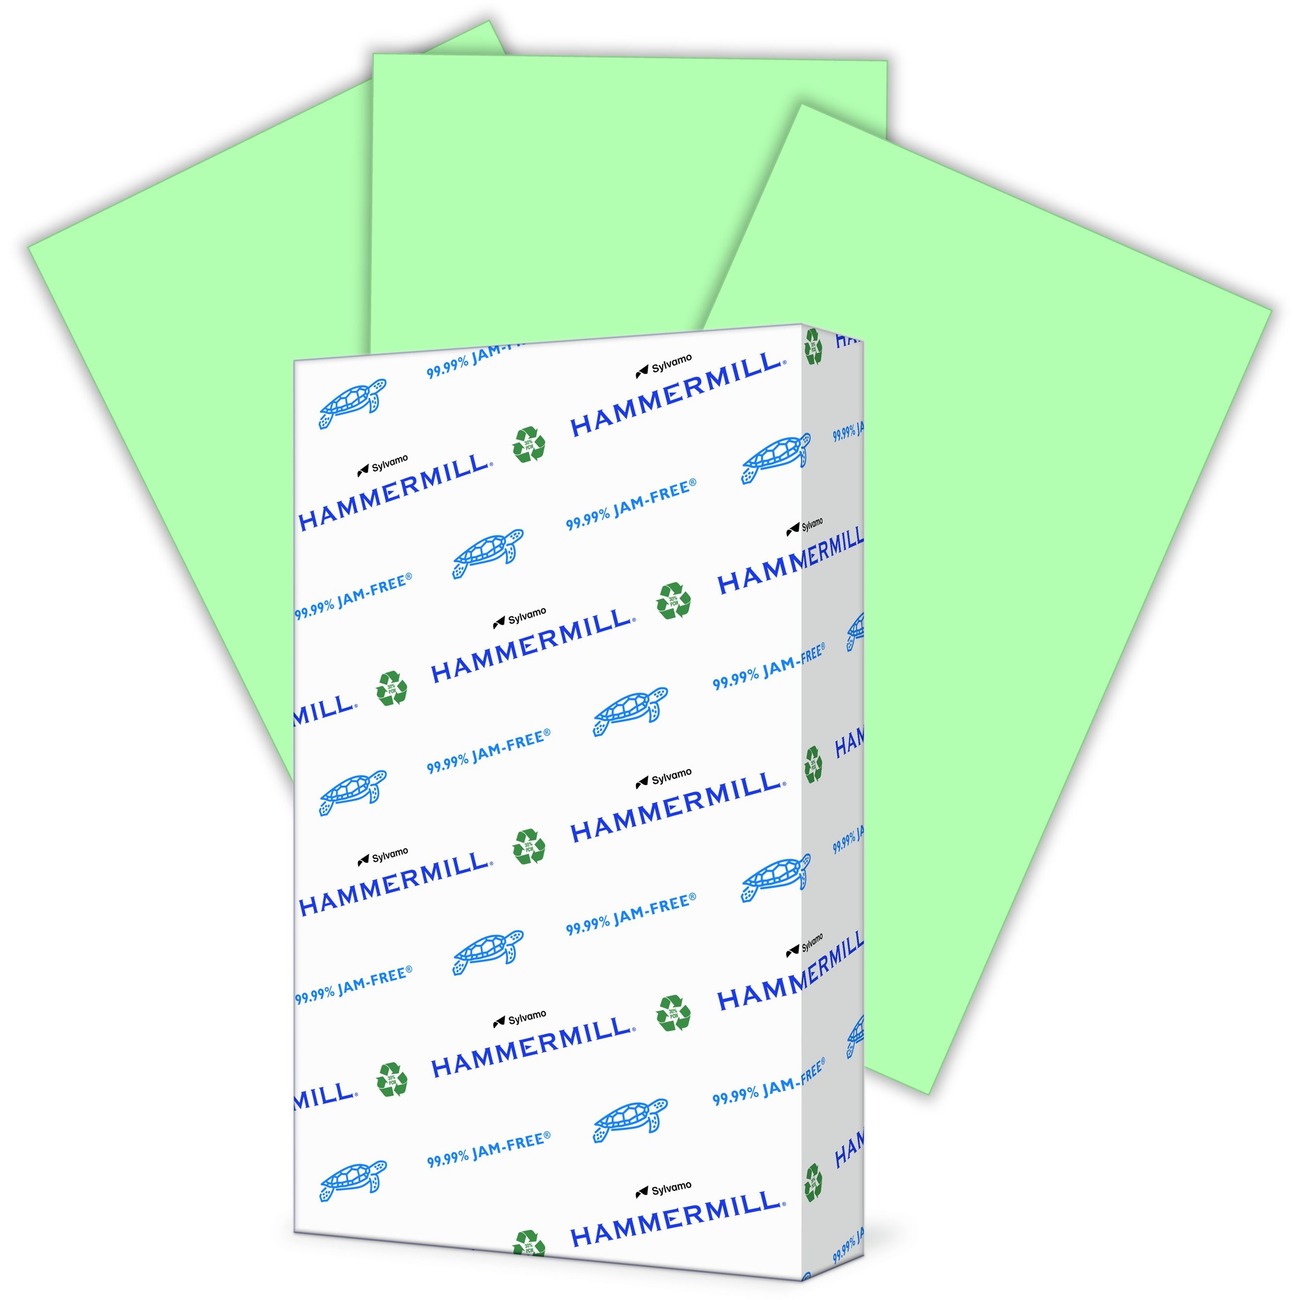 Global Office Premium Multipurpose Paper - 96 Brightness - 11 x 17 - 5 /  Carton - 500 Sheets per Ream - Lewisburg Industrial and Welding